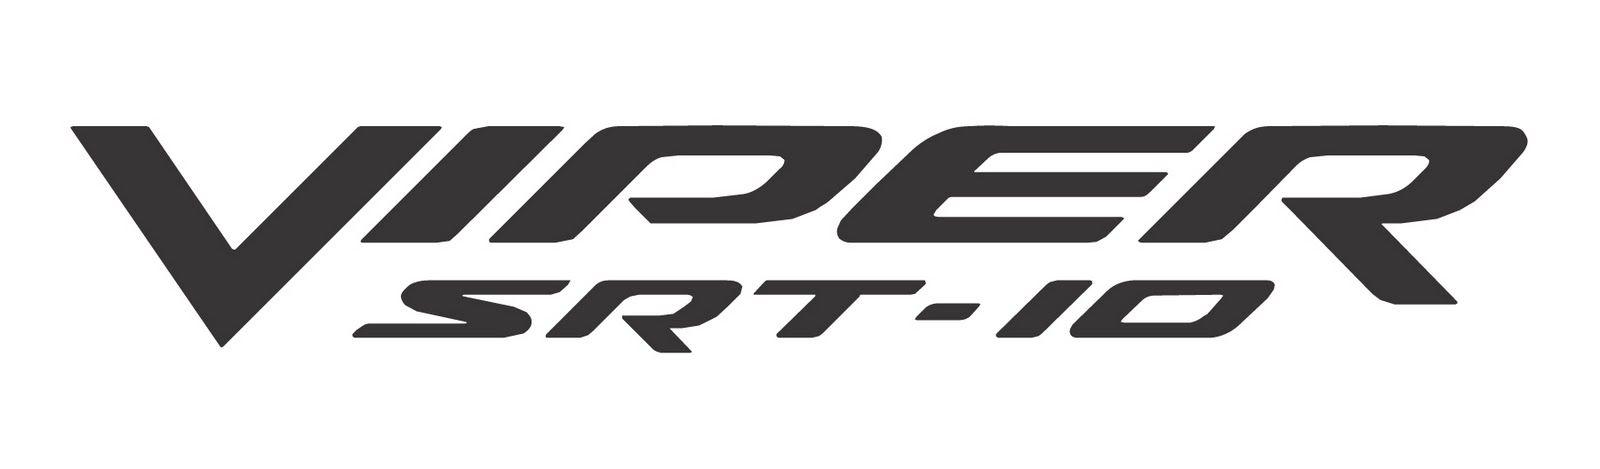 srt10 logo